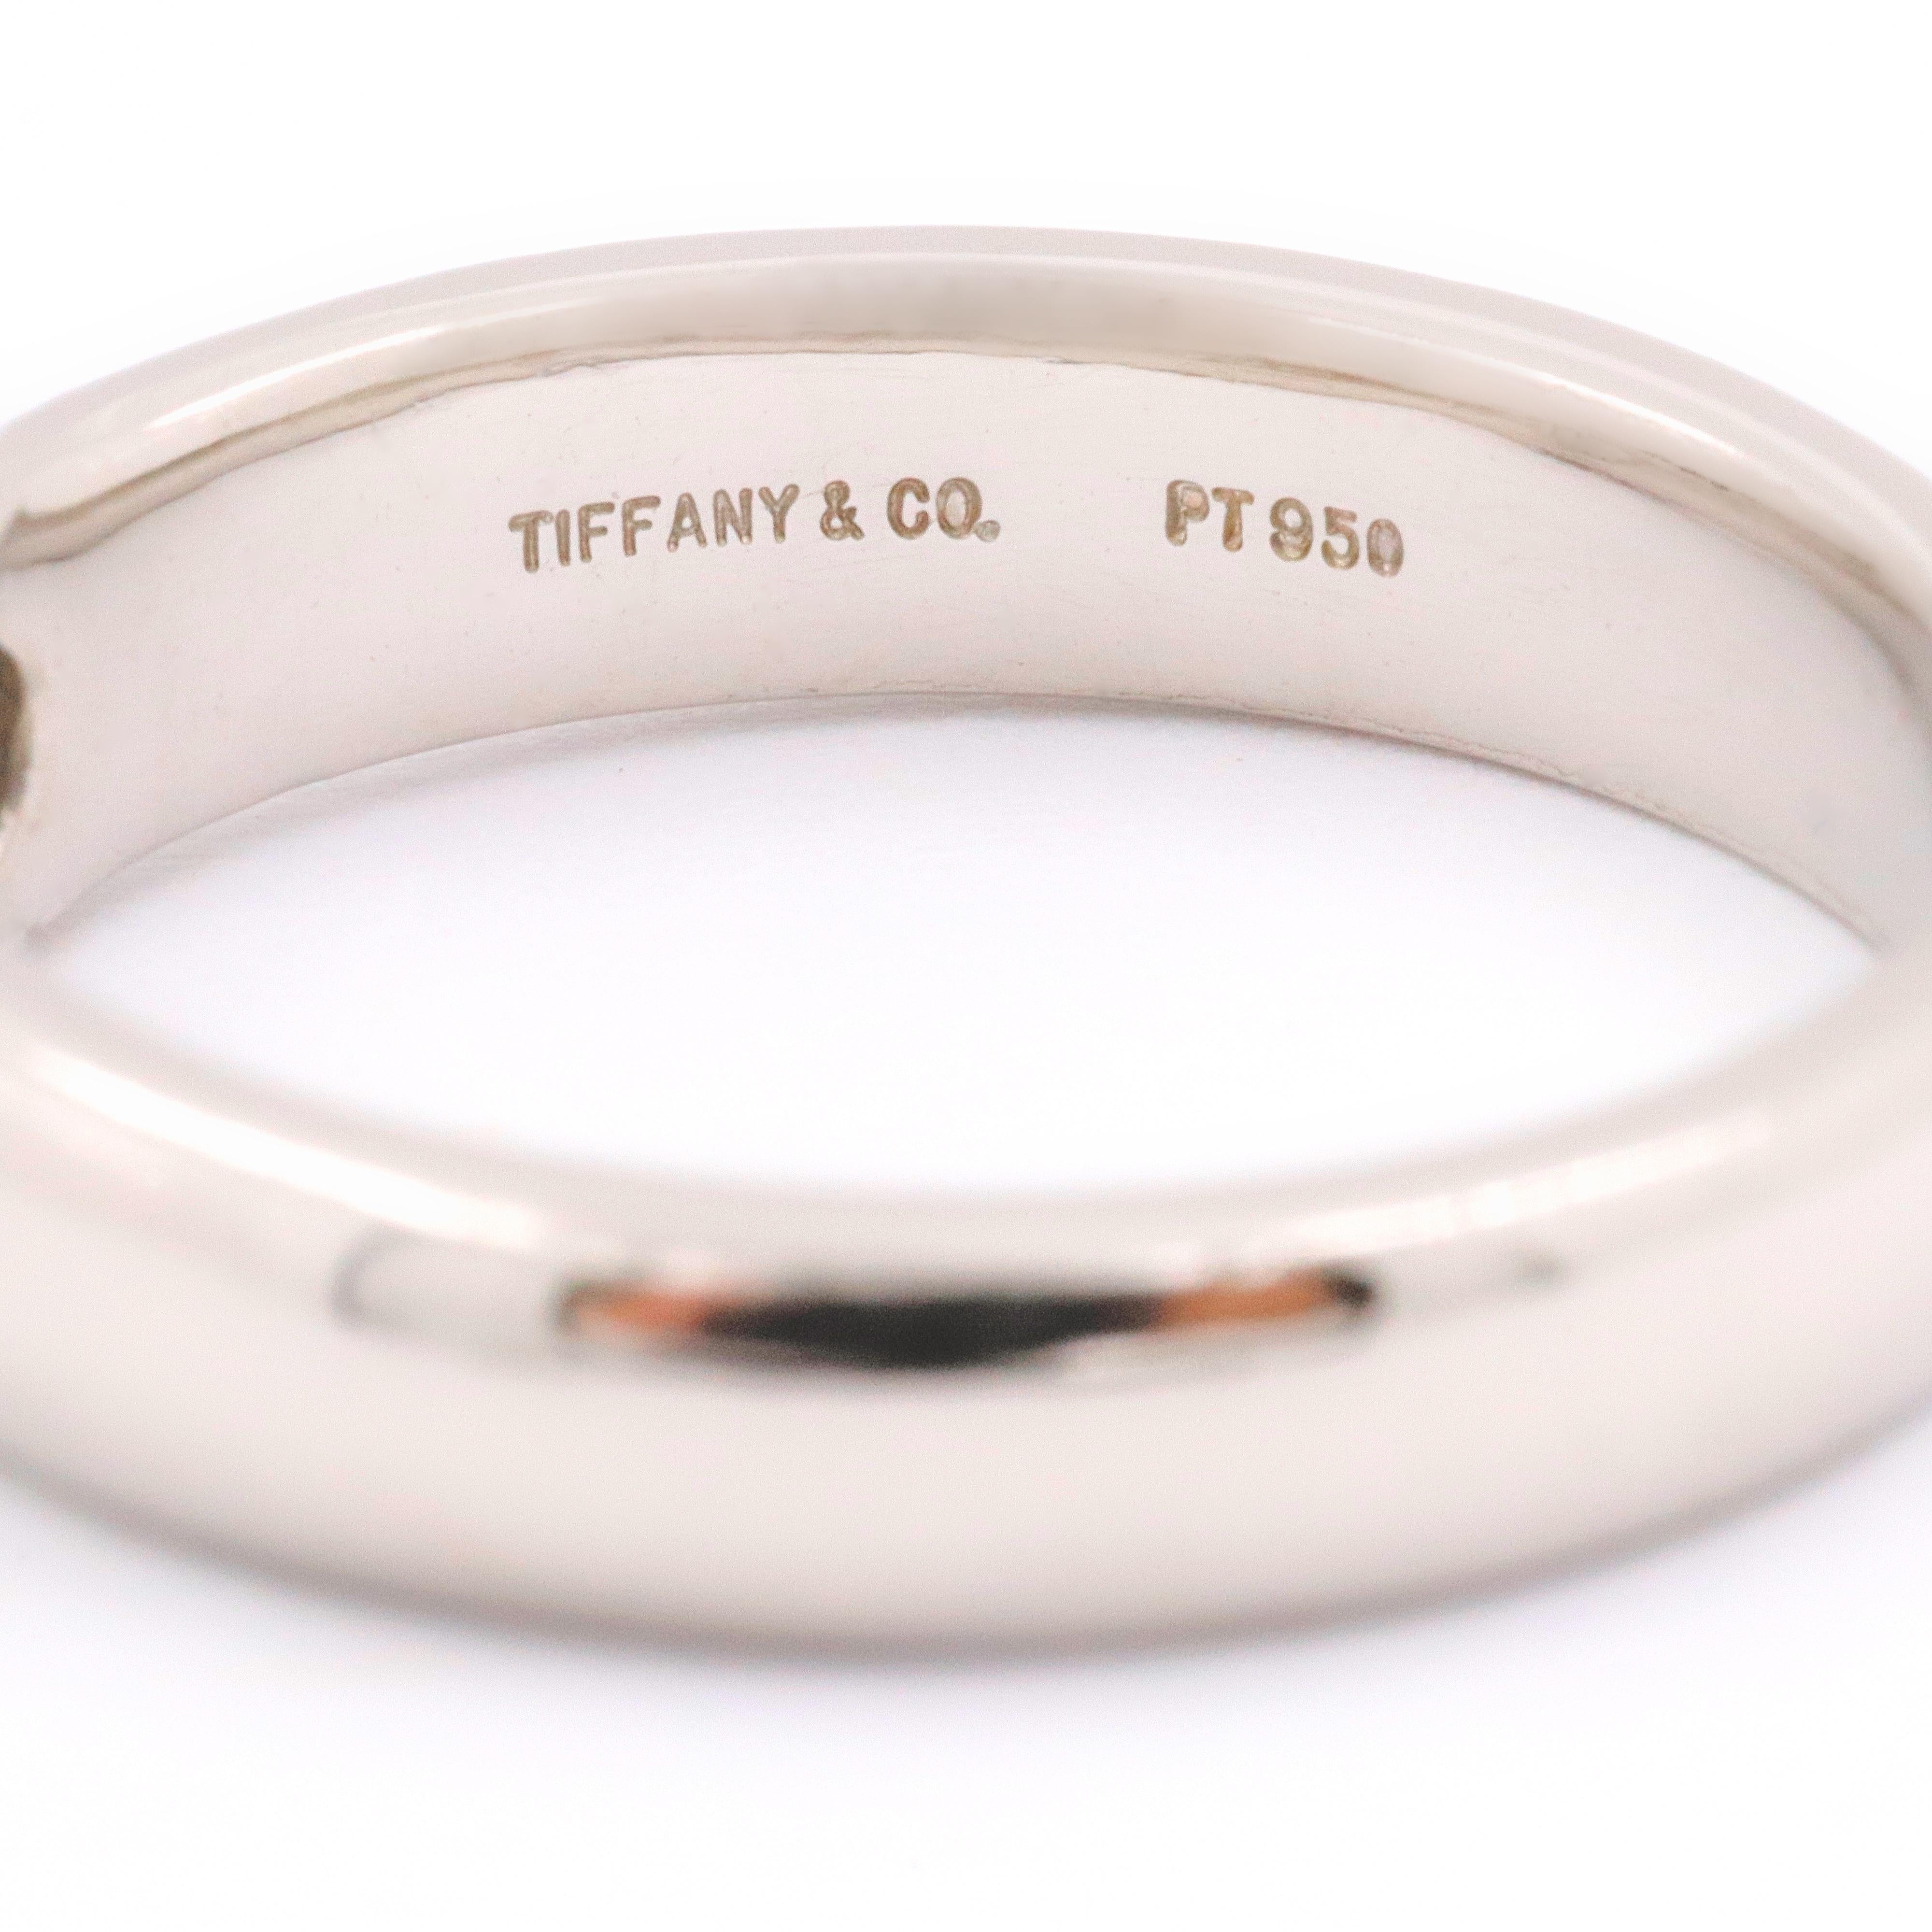 Tiffany & Co. Etoile Round Diamond 0.39 Carat Engagement Ring in Platinum 4